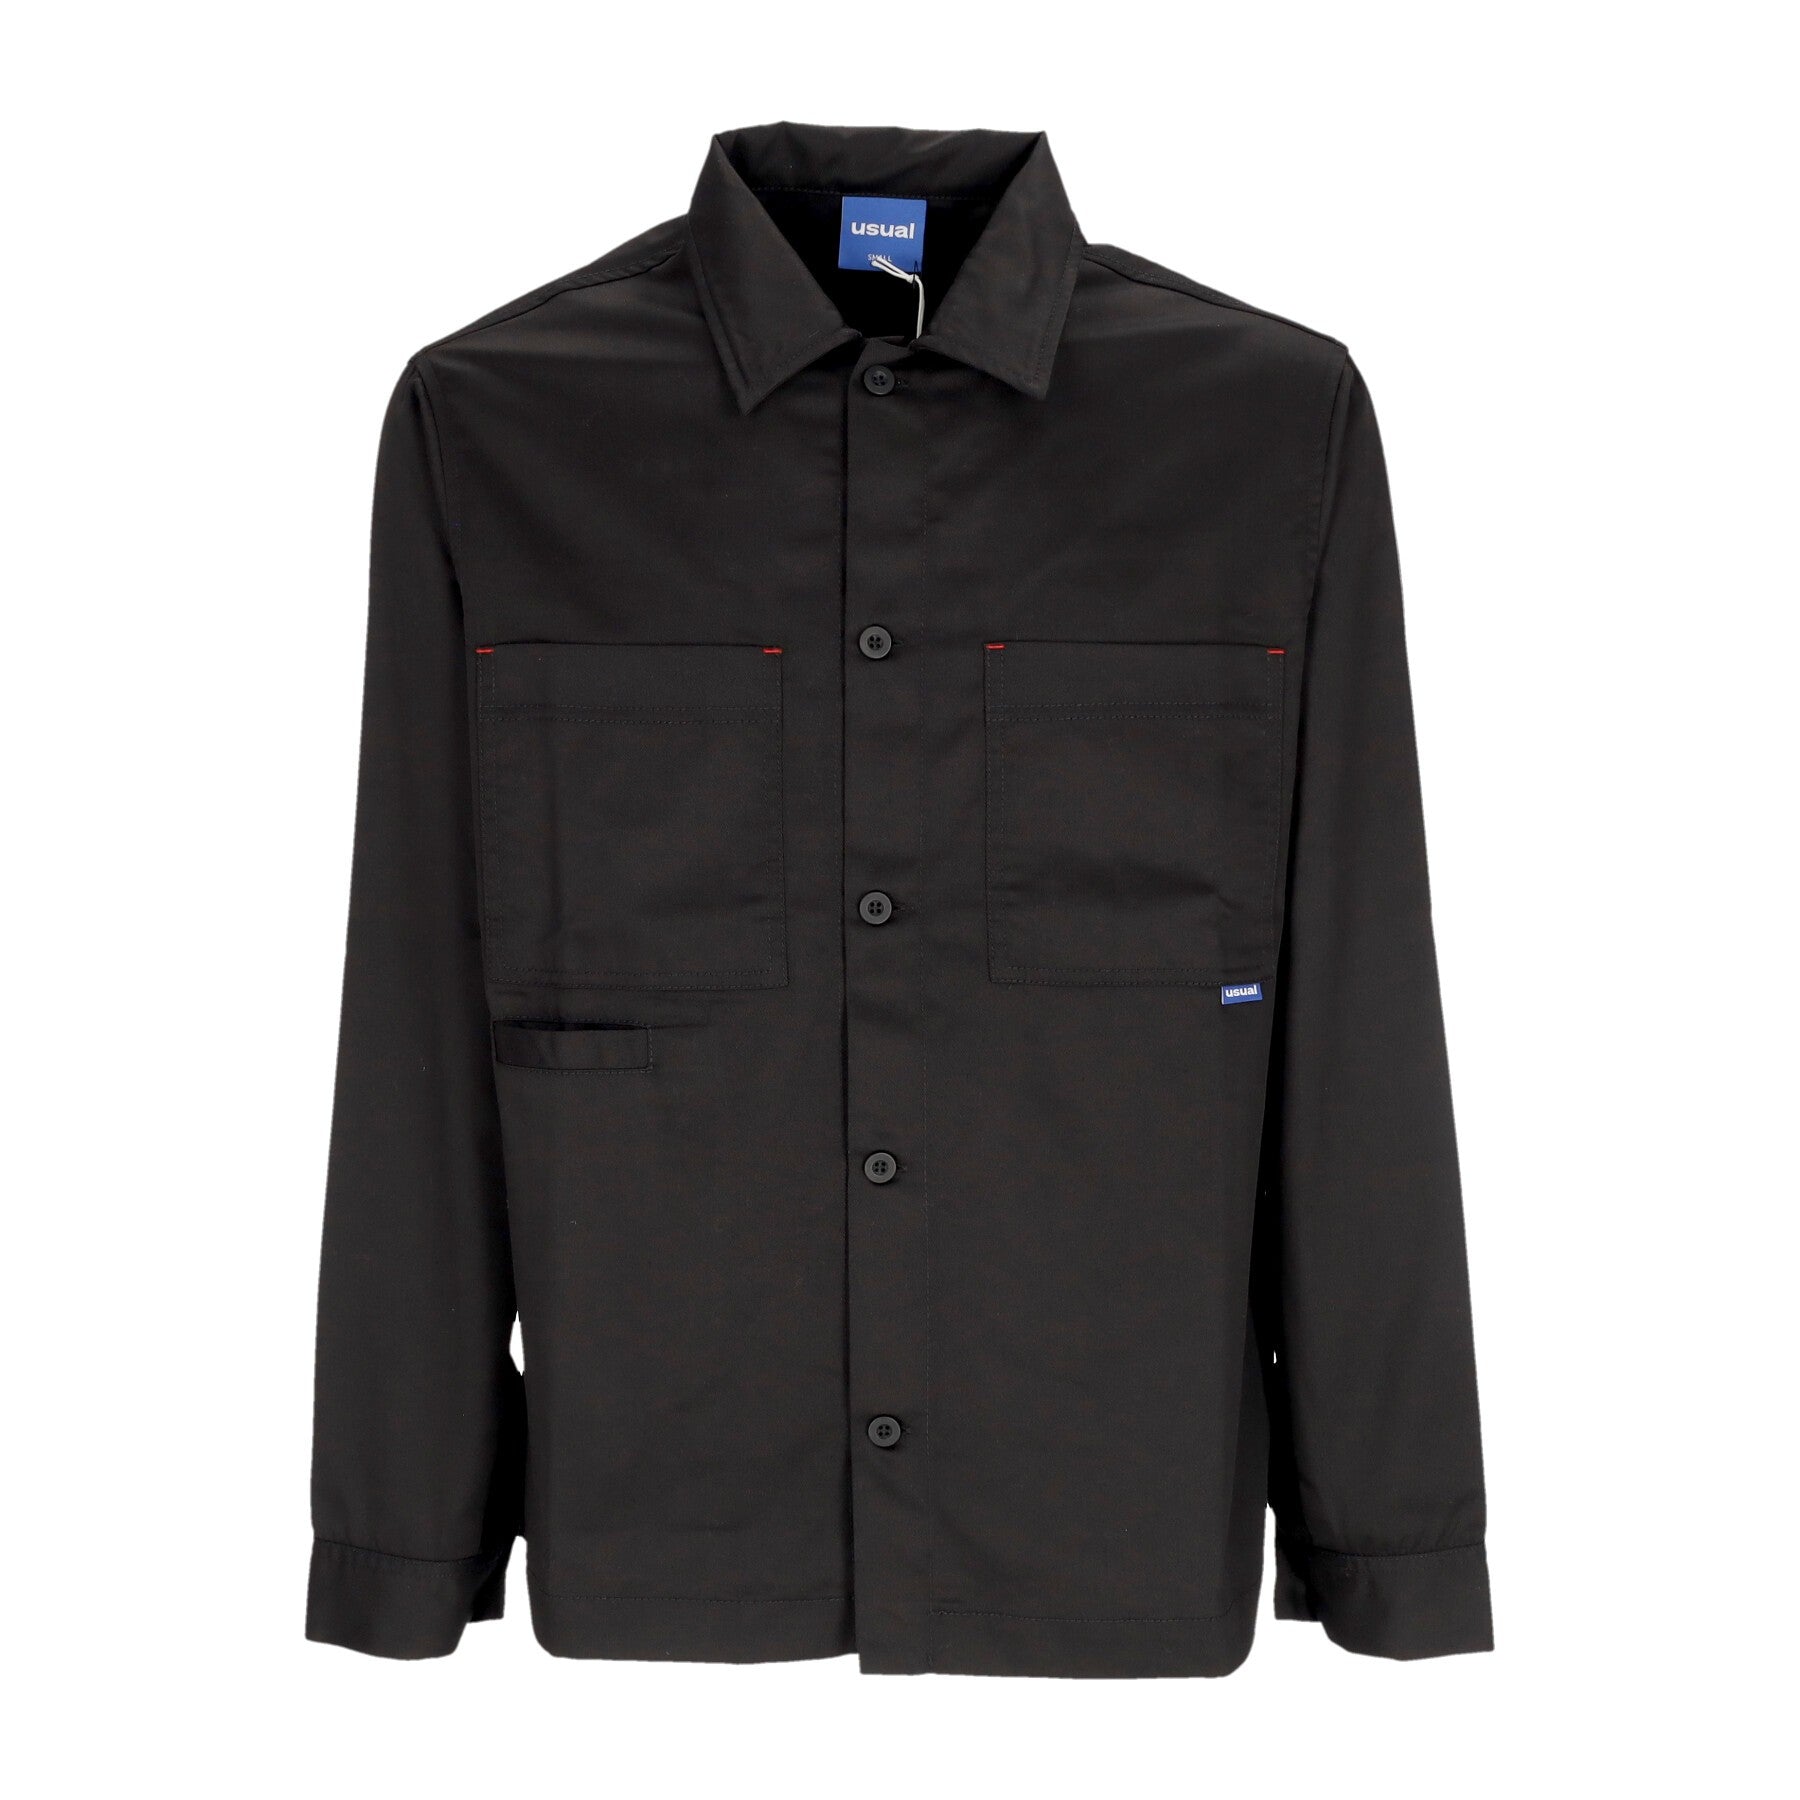 Usual, Camicia Manica Lunga Uomo Hangar Button Shirt, Black